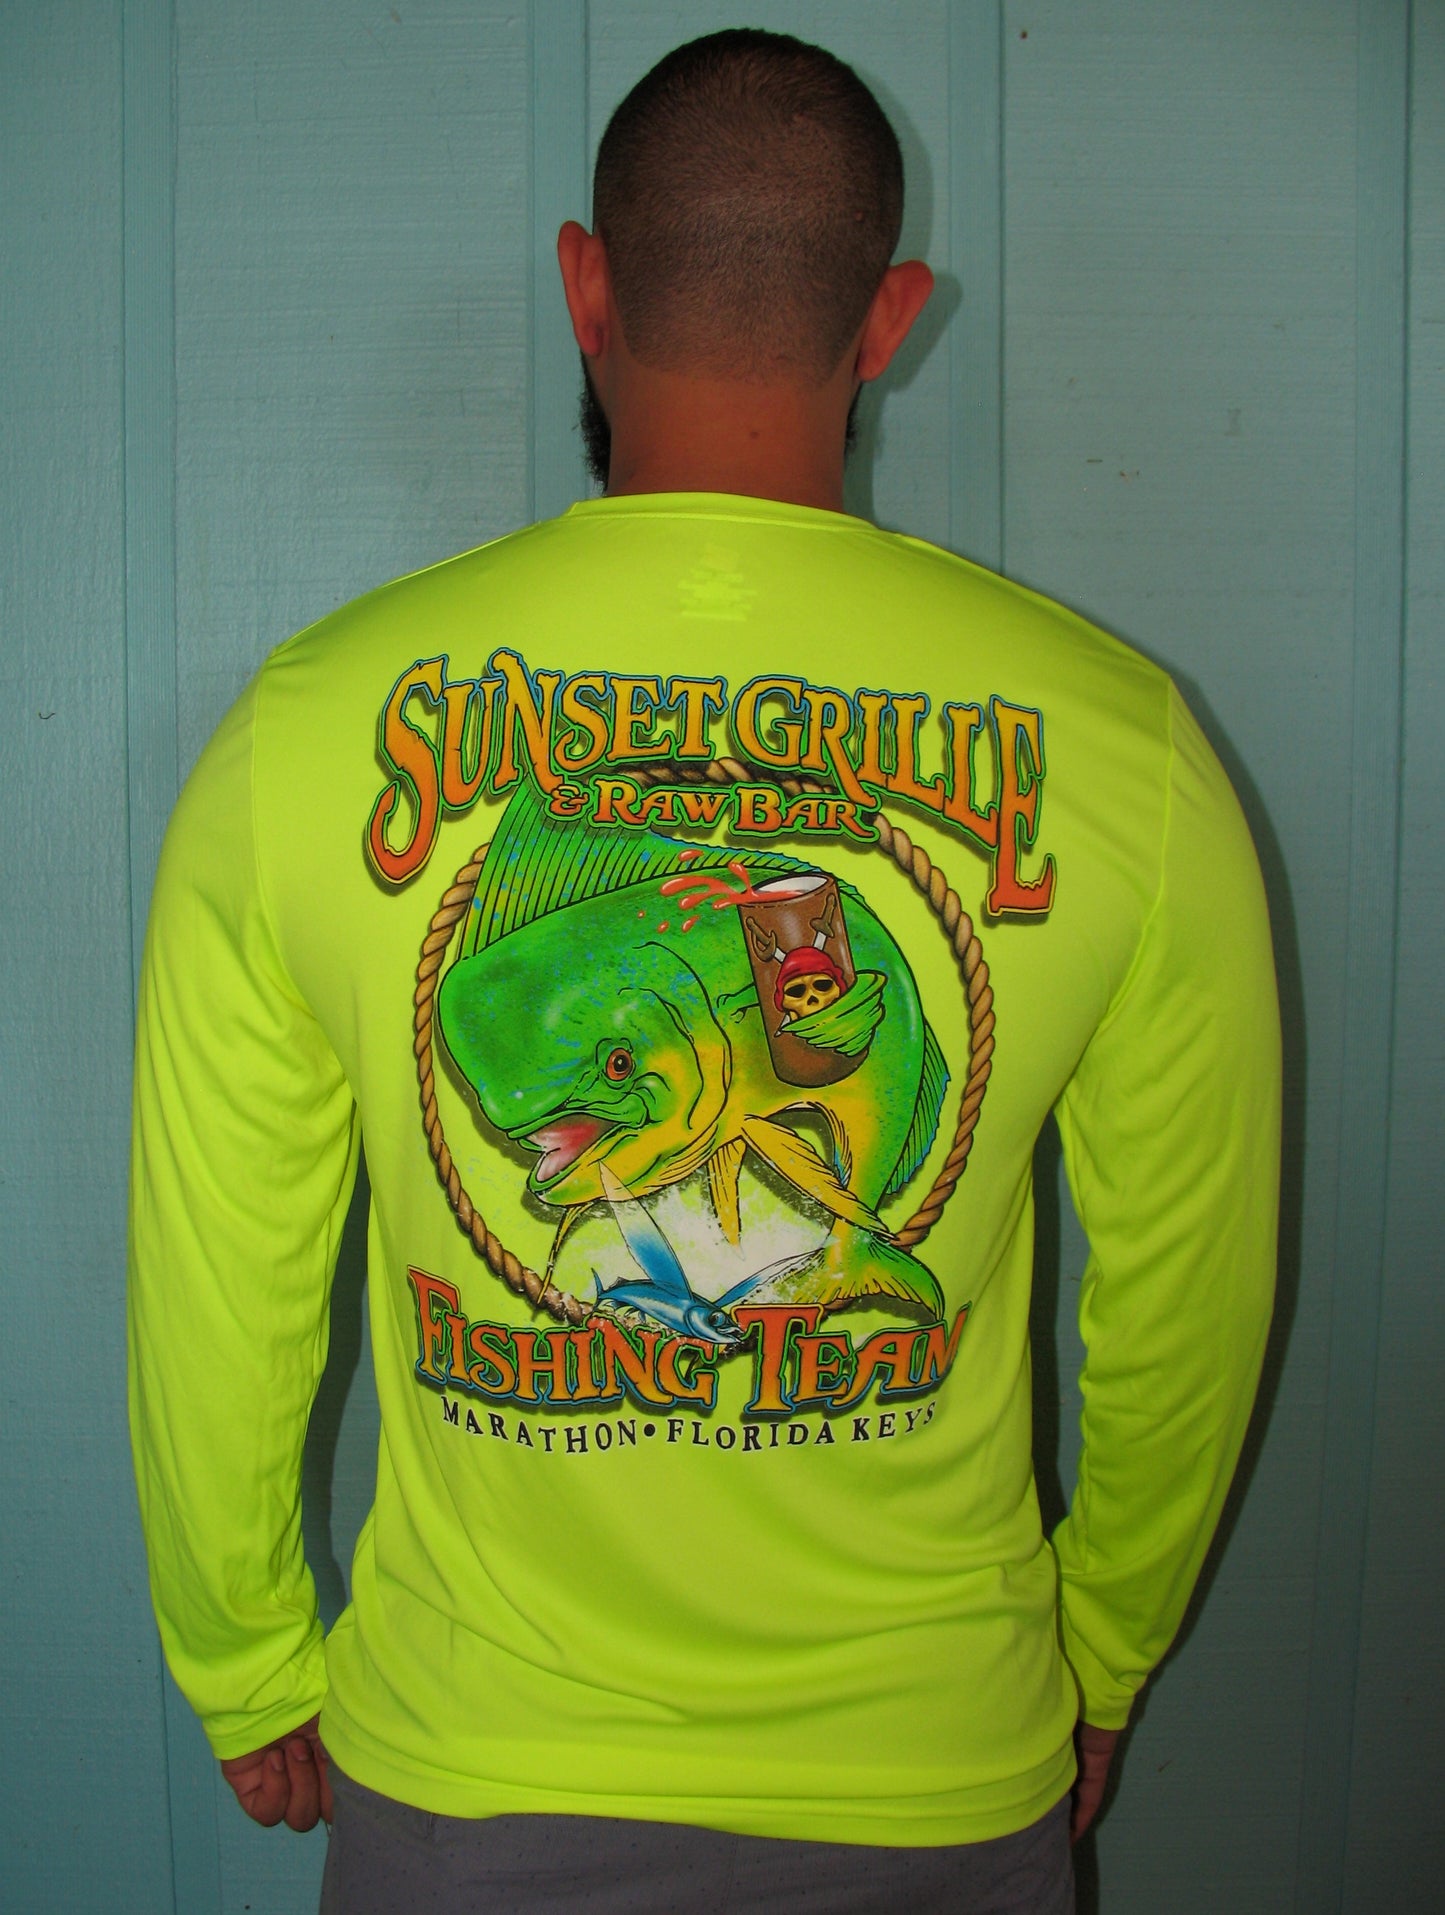 Fishing Team Long Sleeve - Cool Dri – Sunset Grille and Raw Bar - Marathon